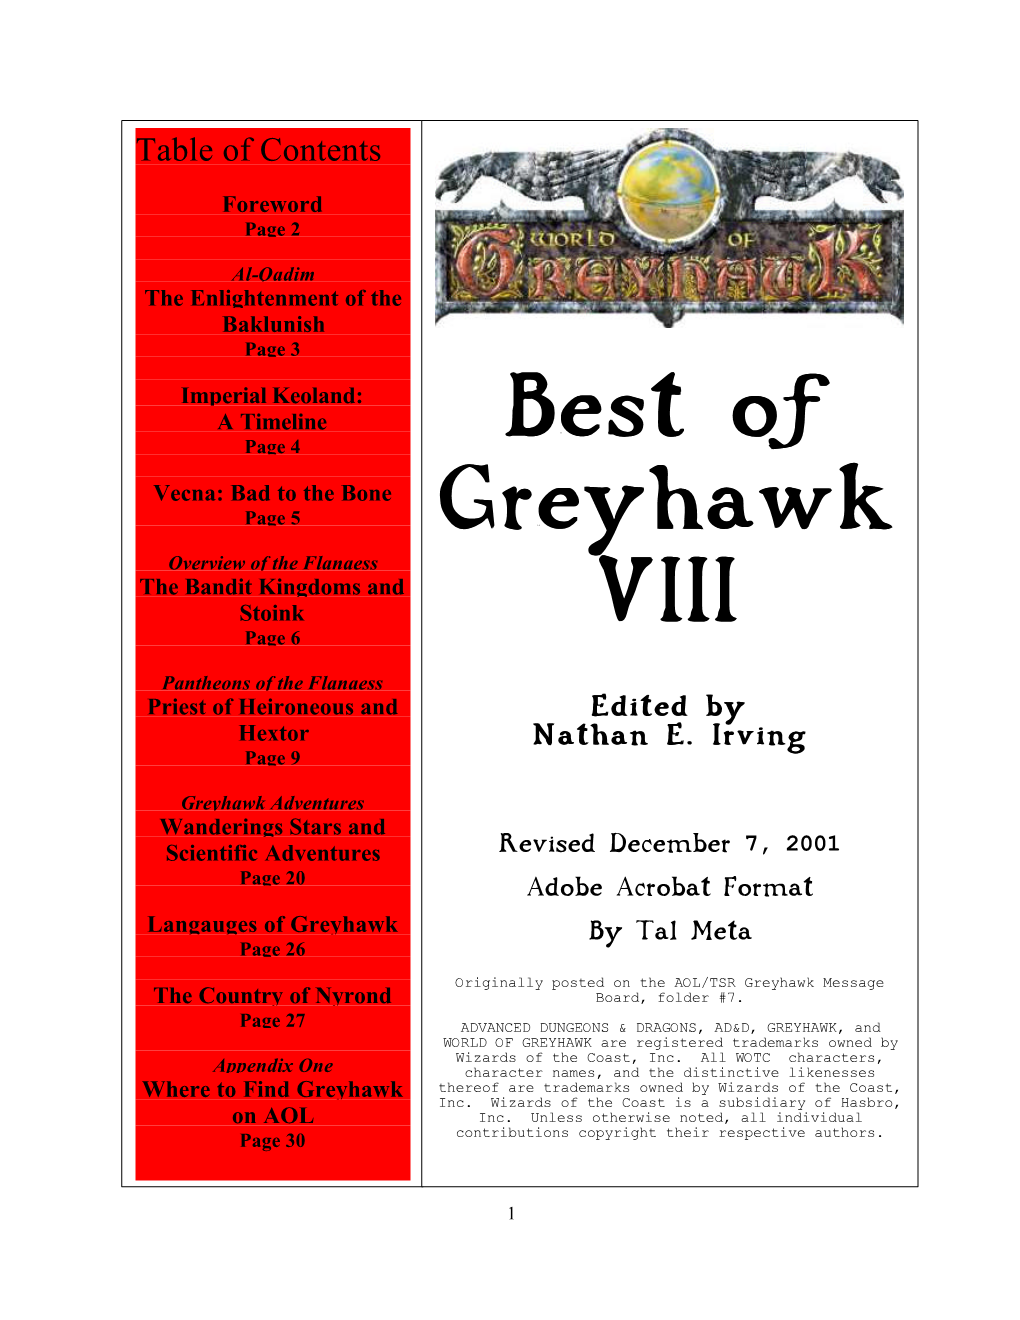 Best of Greyhawk VIII